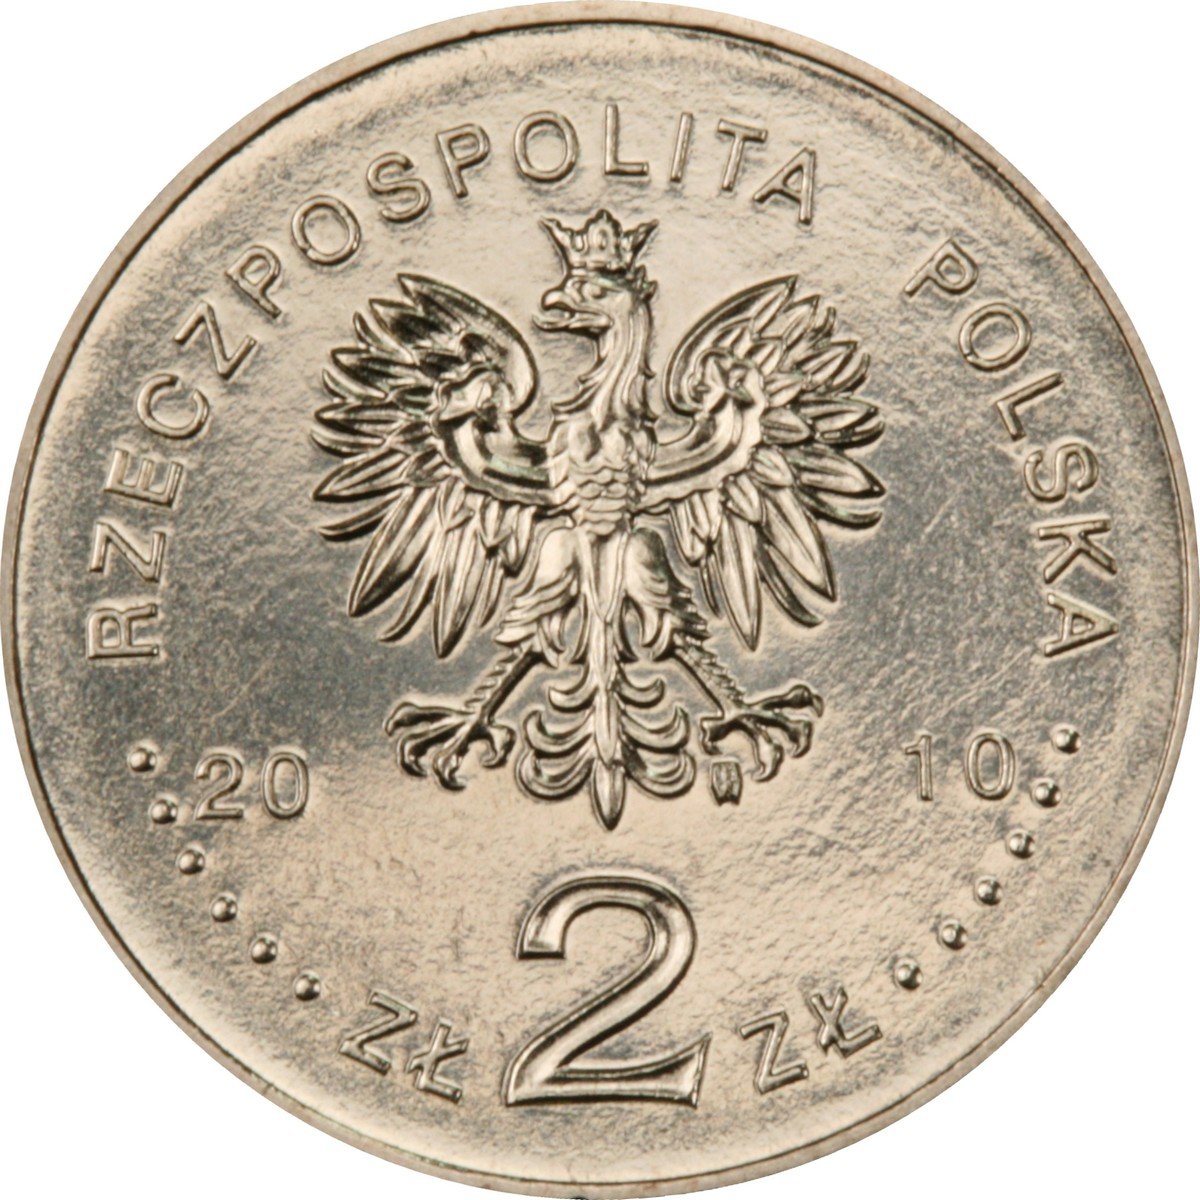 2zl-krzysztof-komeda-awers-monety